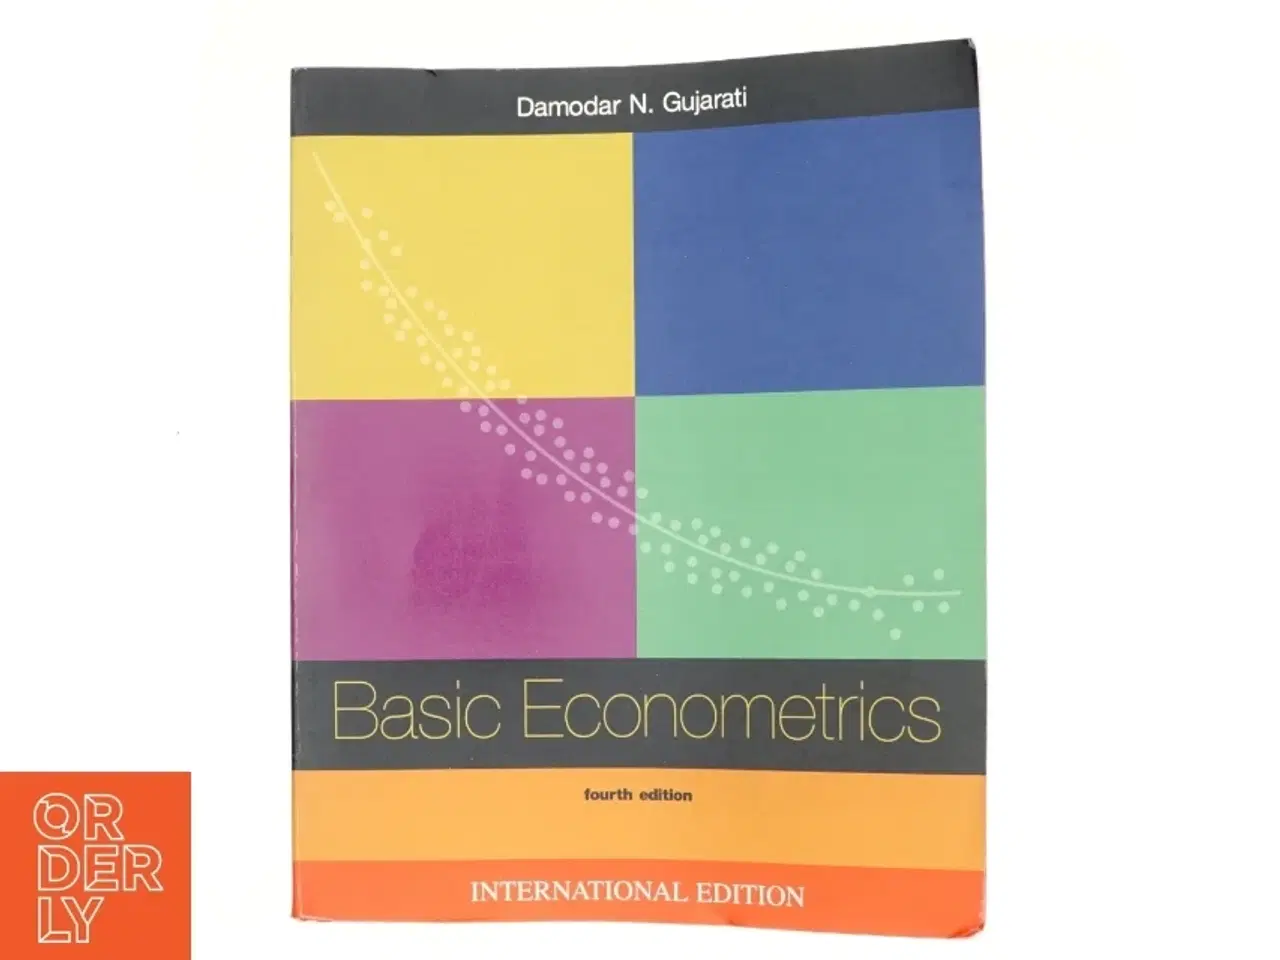 Billede 1 - Basic econometrics af Damodar N. Gujarati (Bog)